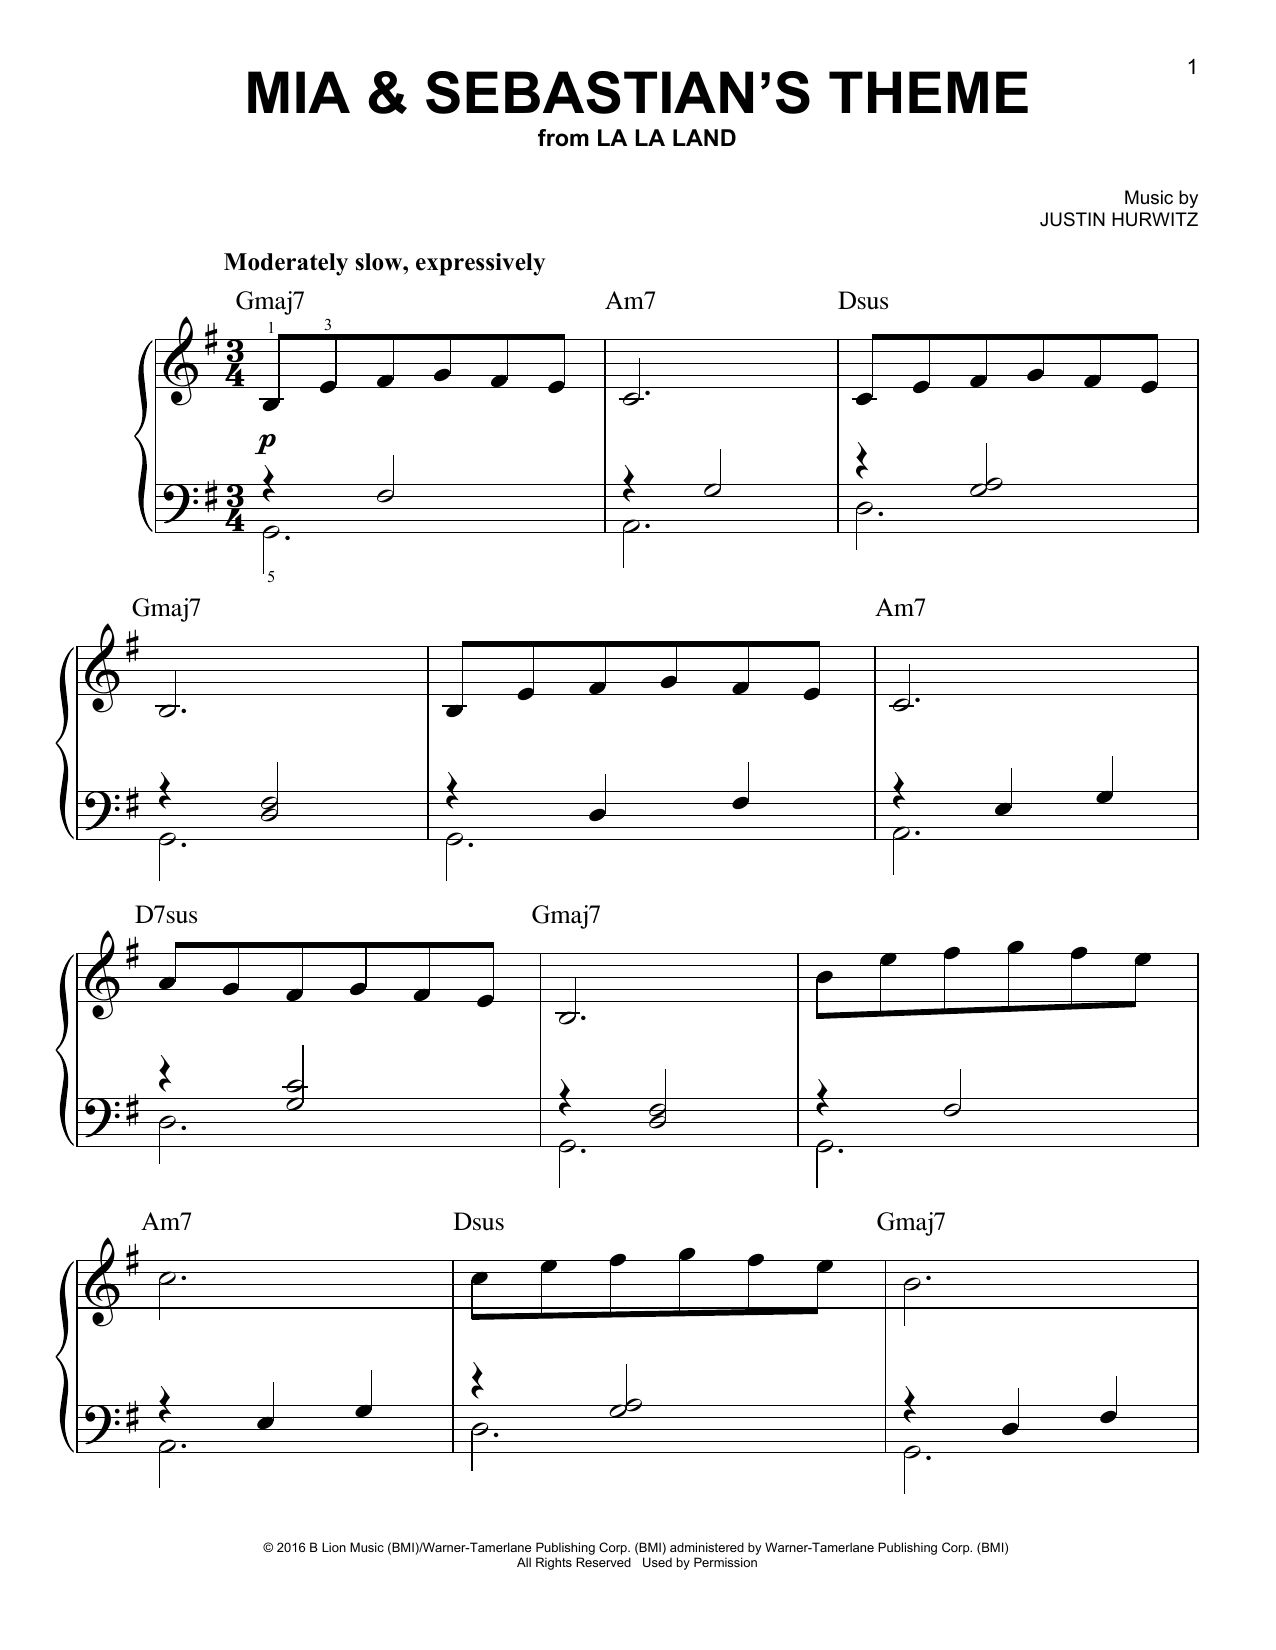 Justin Hurwitz Mia & Sebastian's Theme (from La La Land) Sheet Music Notes & Chords for Tenor Sax Solo - Download or Print PDF